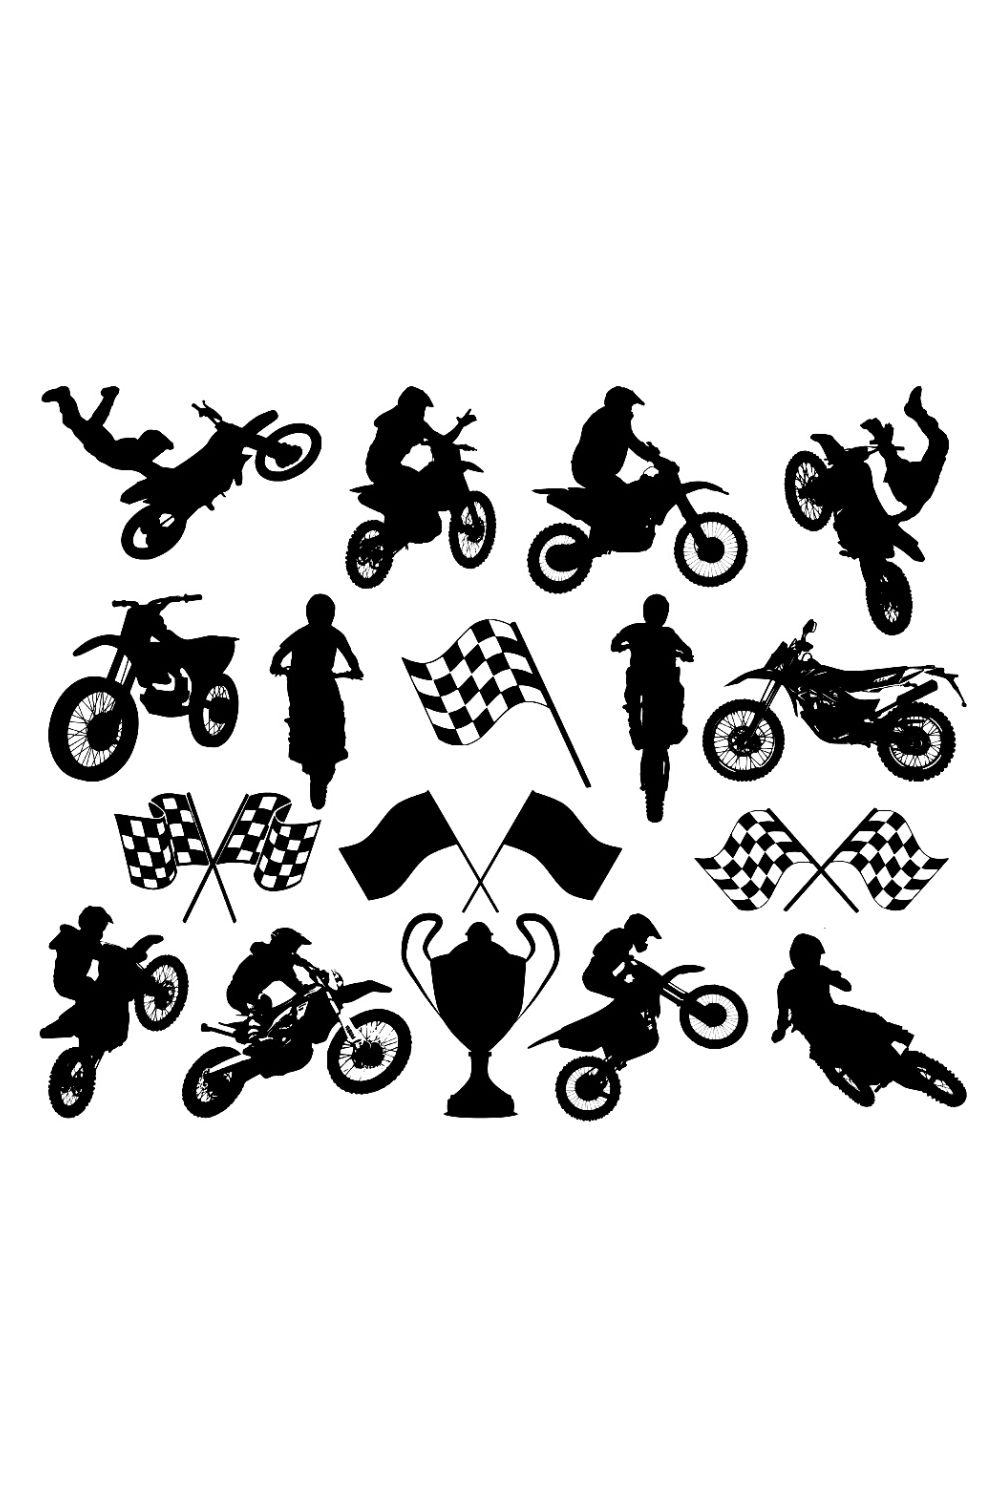 Motocross Silhouette Bundle Pinterest image.